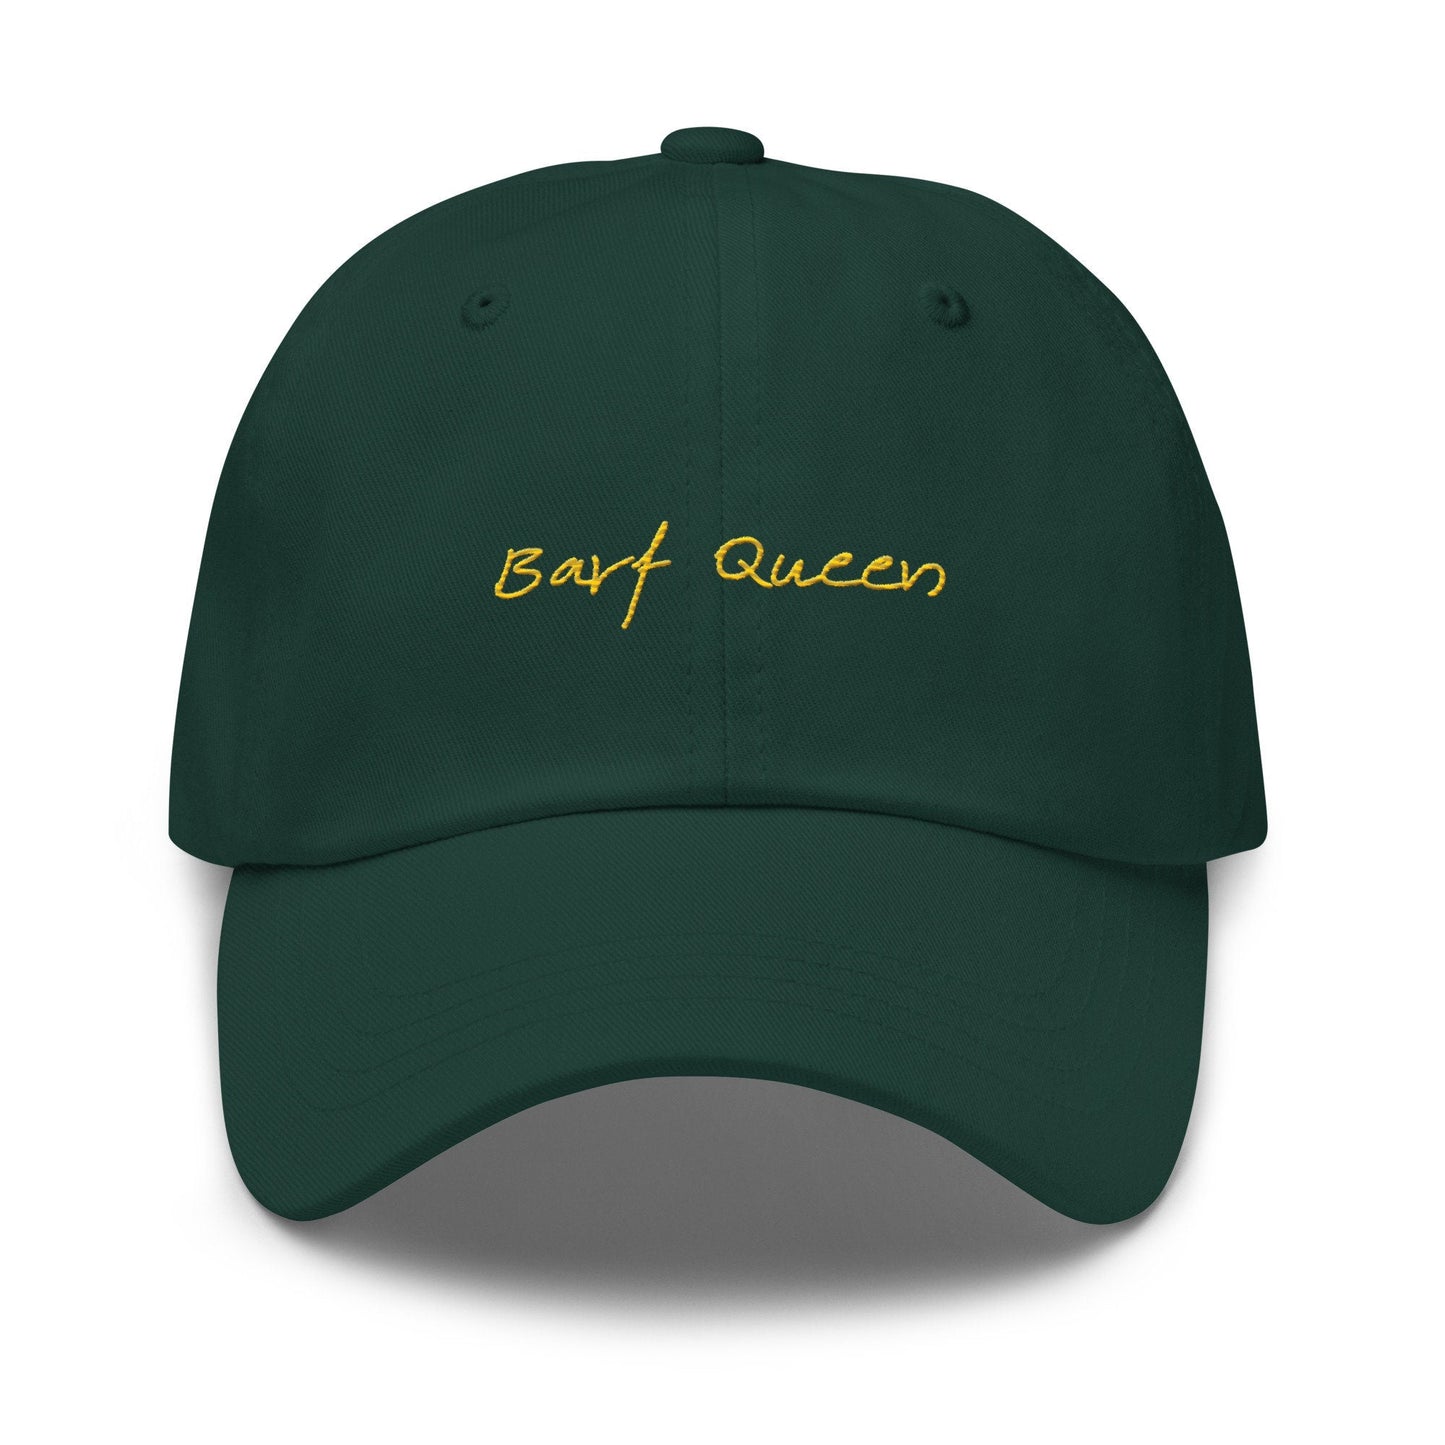 Barf Queen Hat - Funny Gift for Sensitive Tummy Baddies - Minimalist Cotton Embroidered Cap - Evilwater Originals